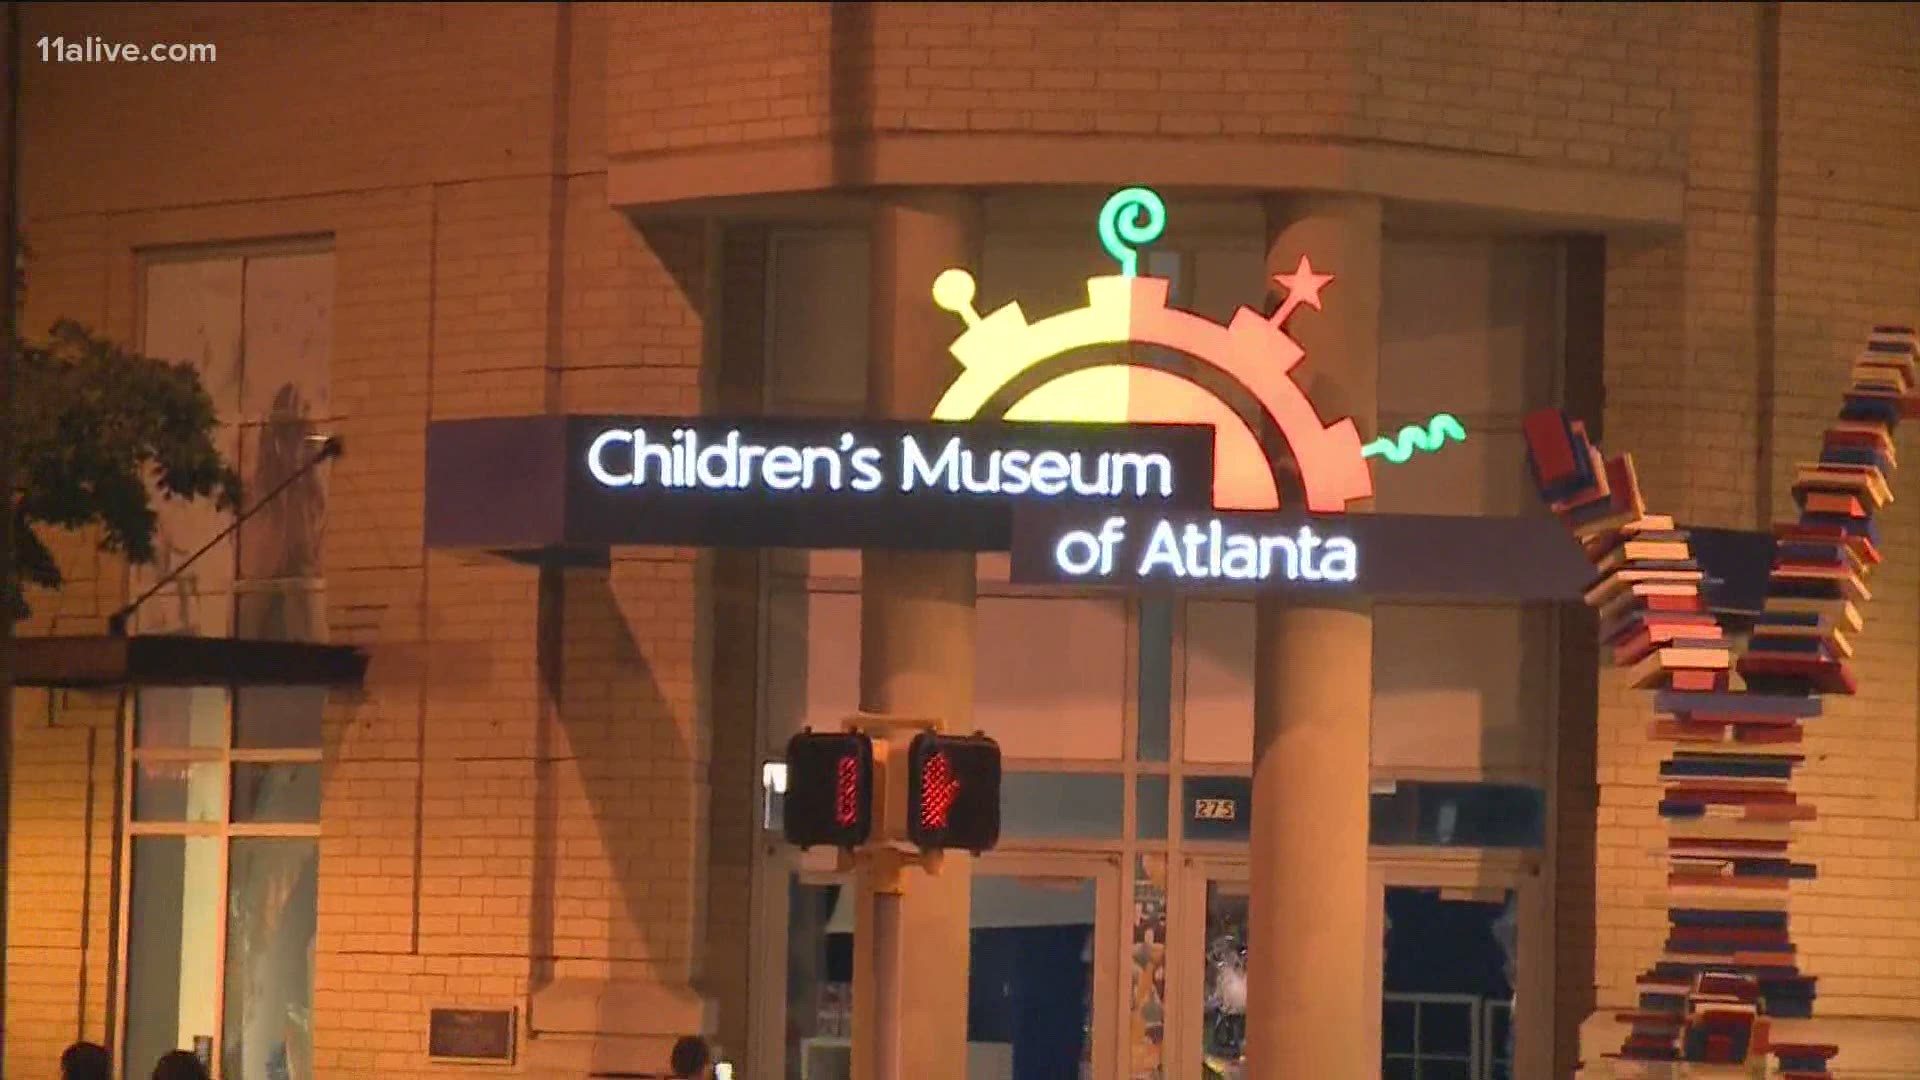 Windows broken Atlanta Children's Museum Saturday night.